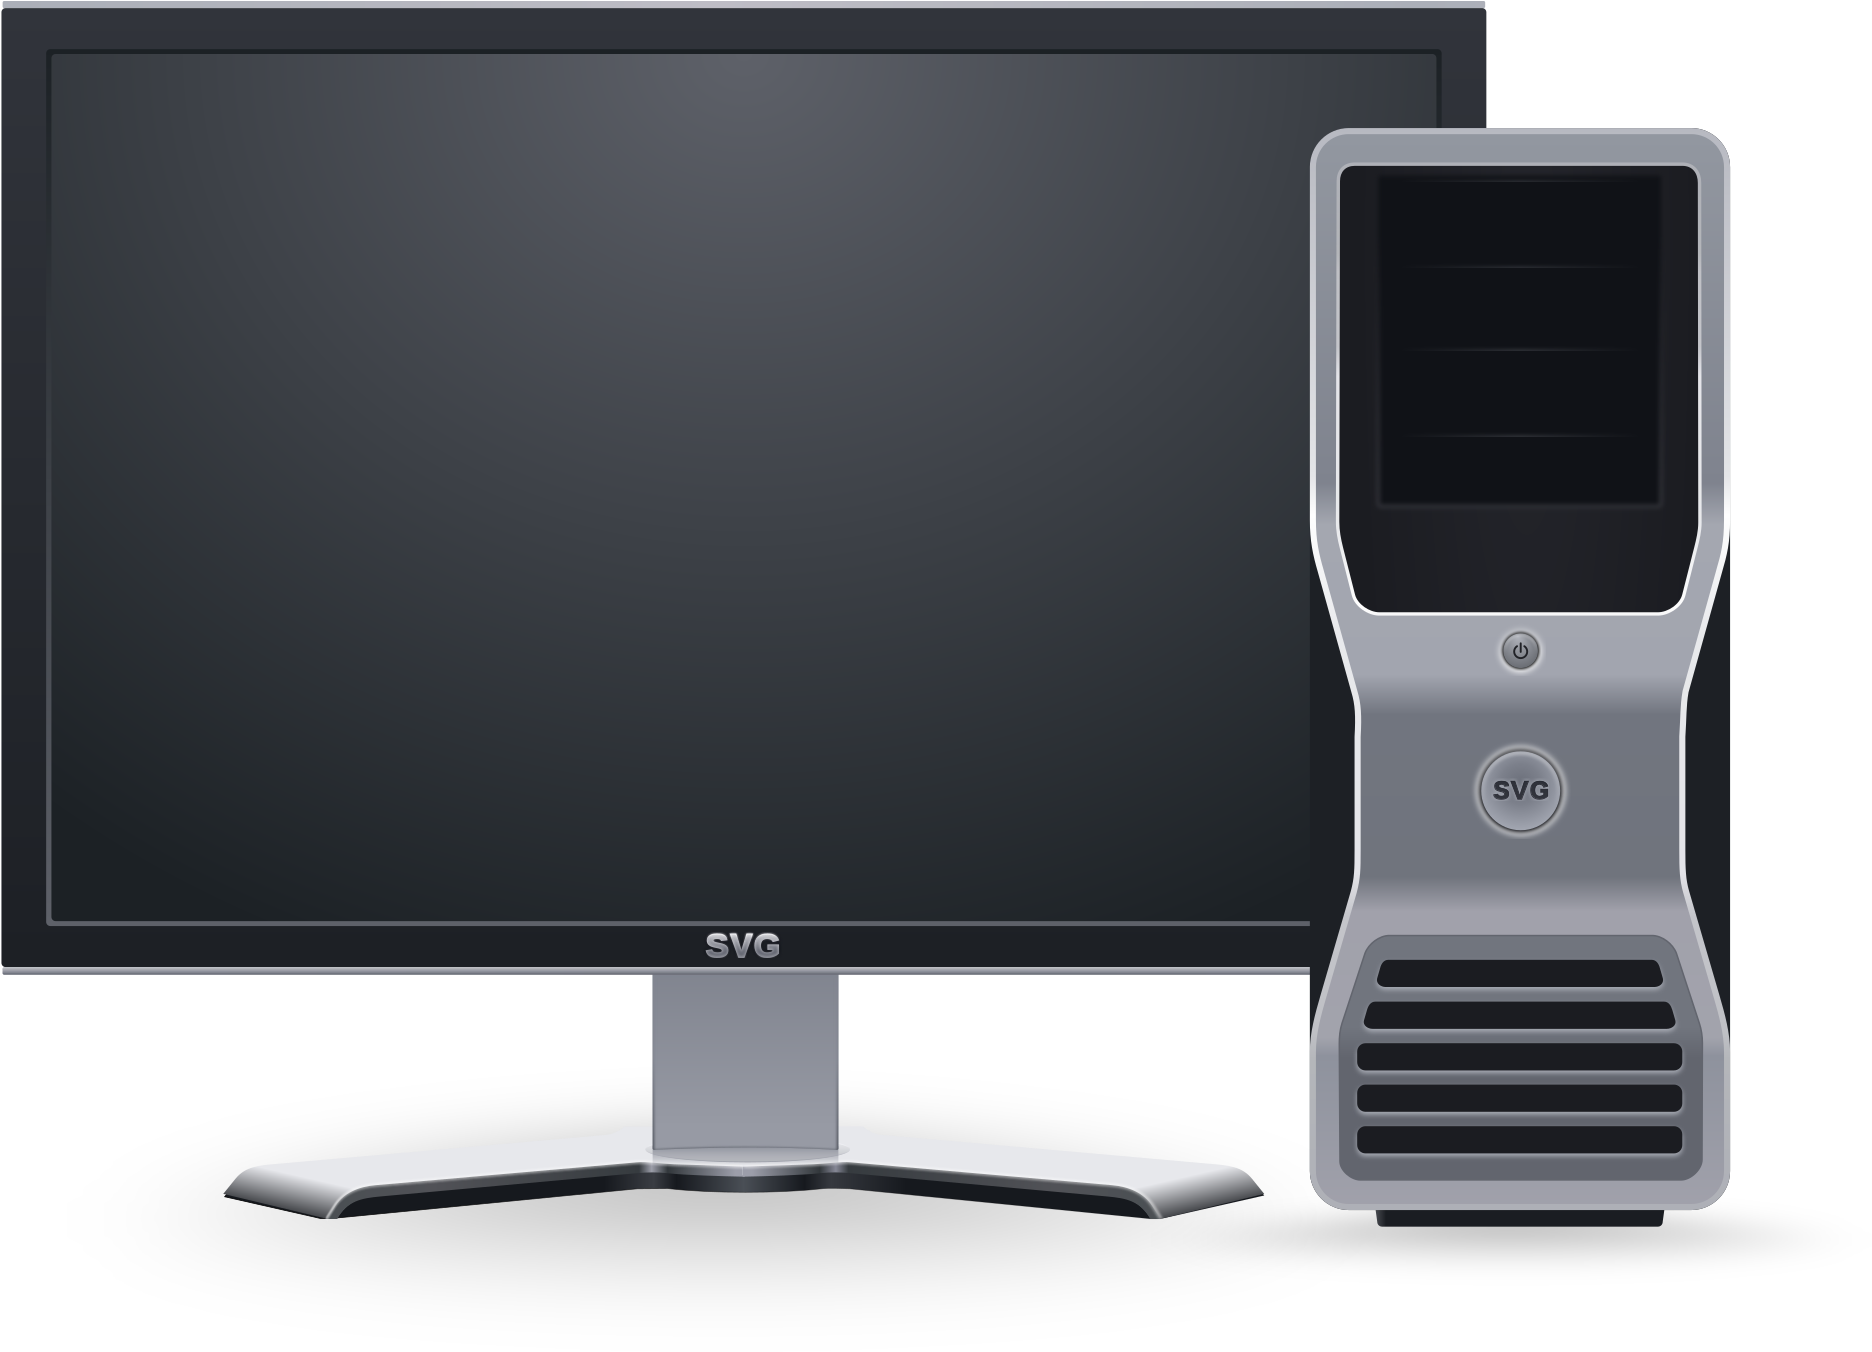 Open computers. Компьютер спереди. Передний вид компьютера. Компьютер спереди PNG. Арт компьютера PNG современный.